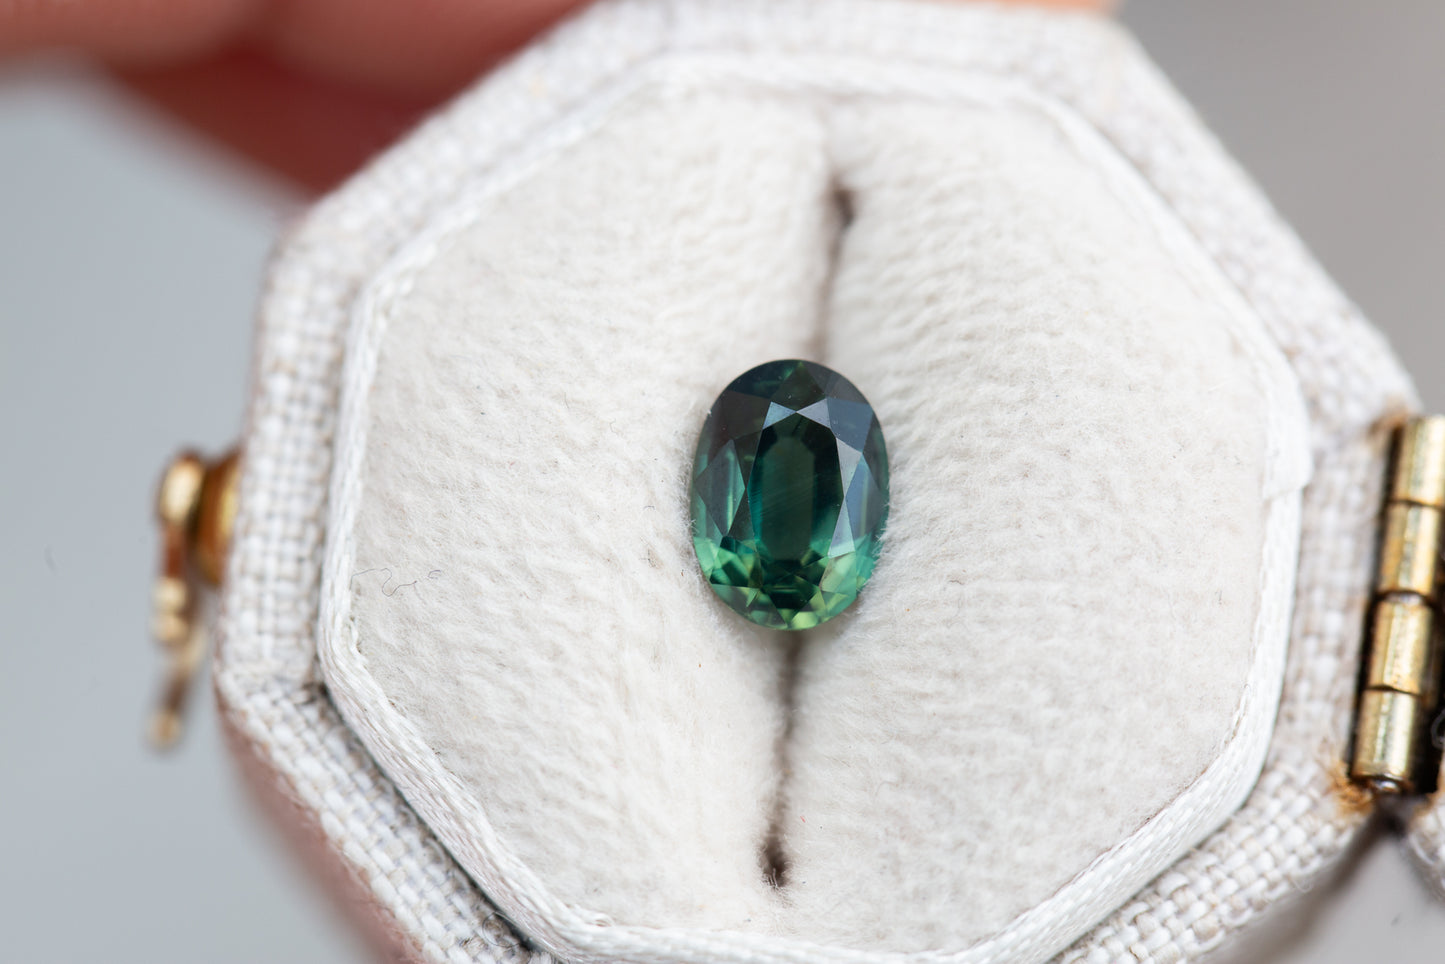 1.1ct oval deep green hint of blue sapphire